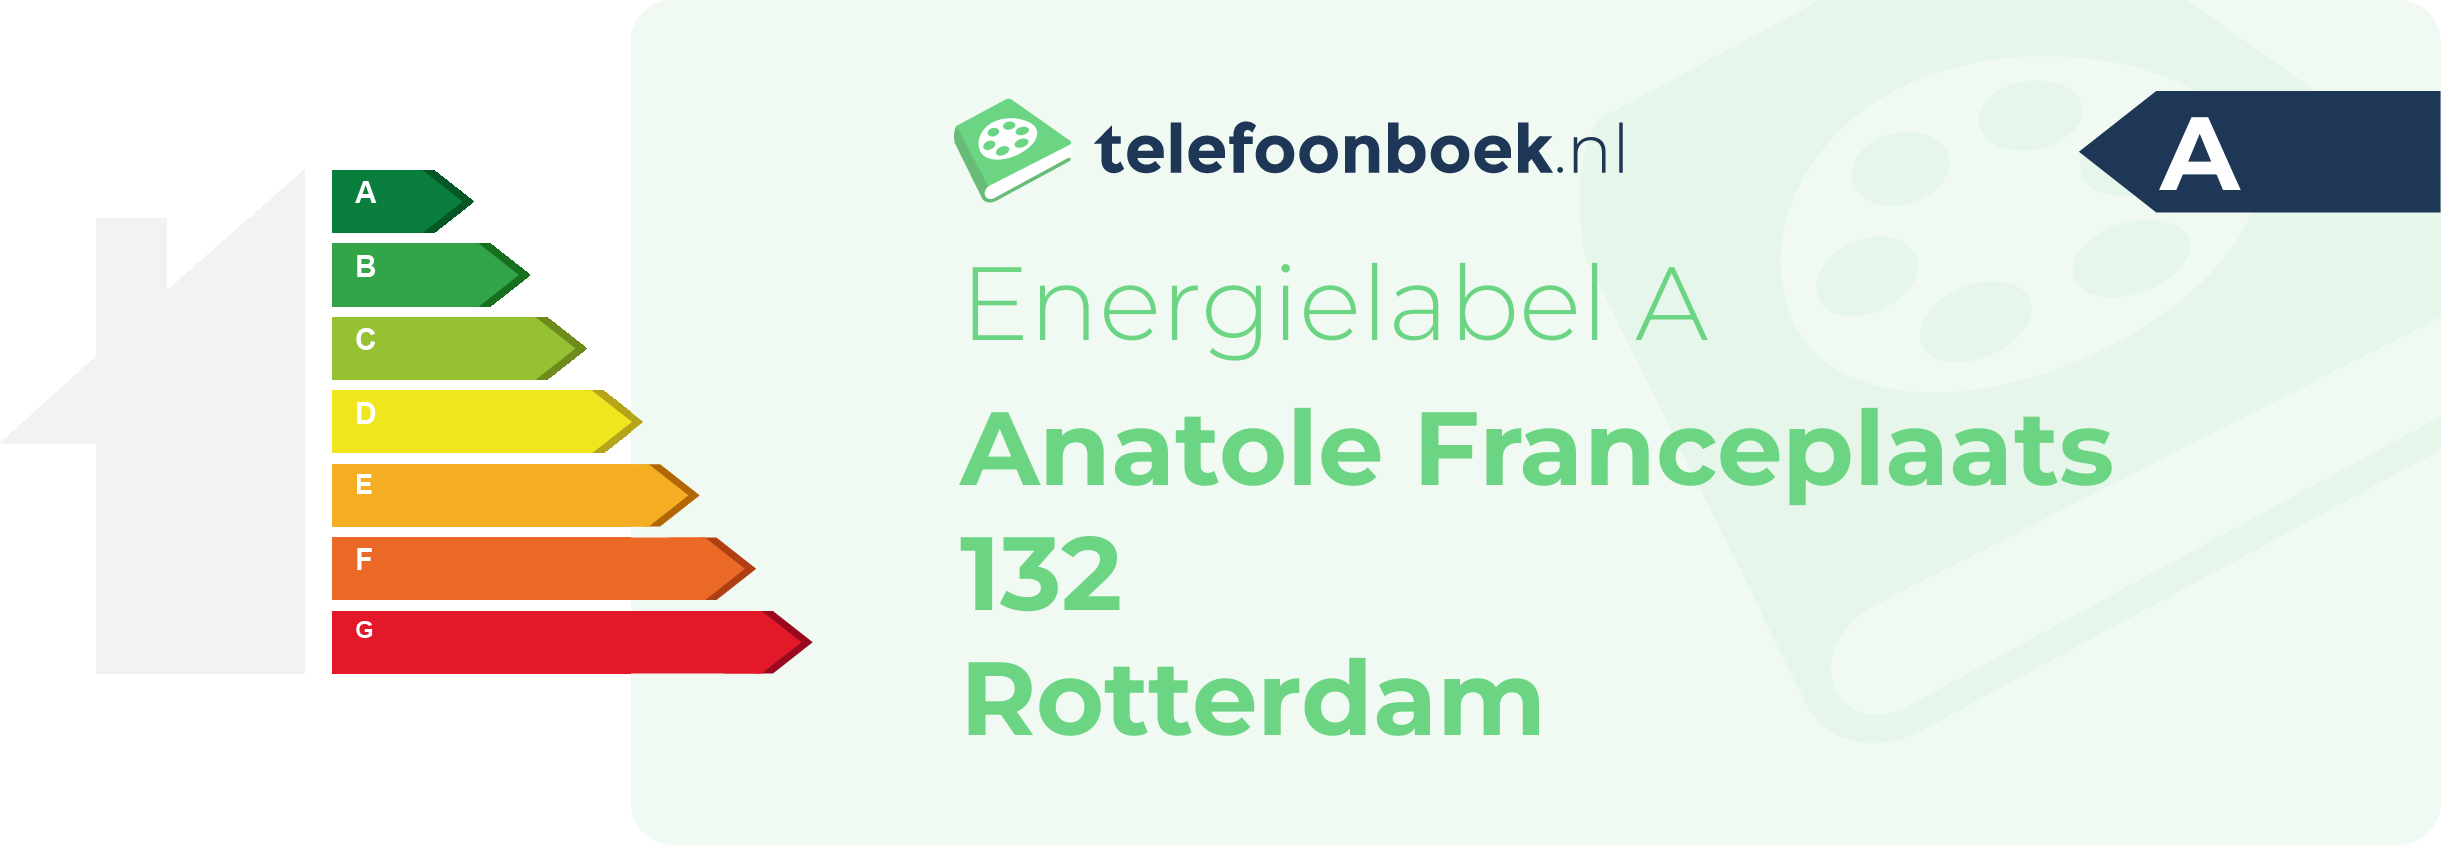 Energielabel Anatole Franceplaats 132 Rotterdam